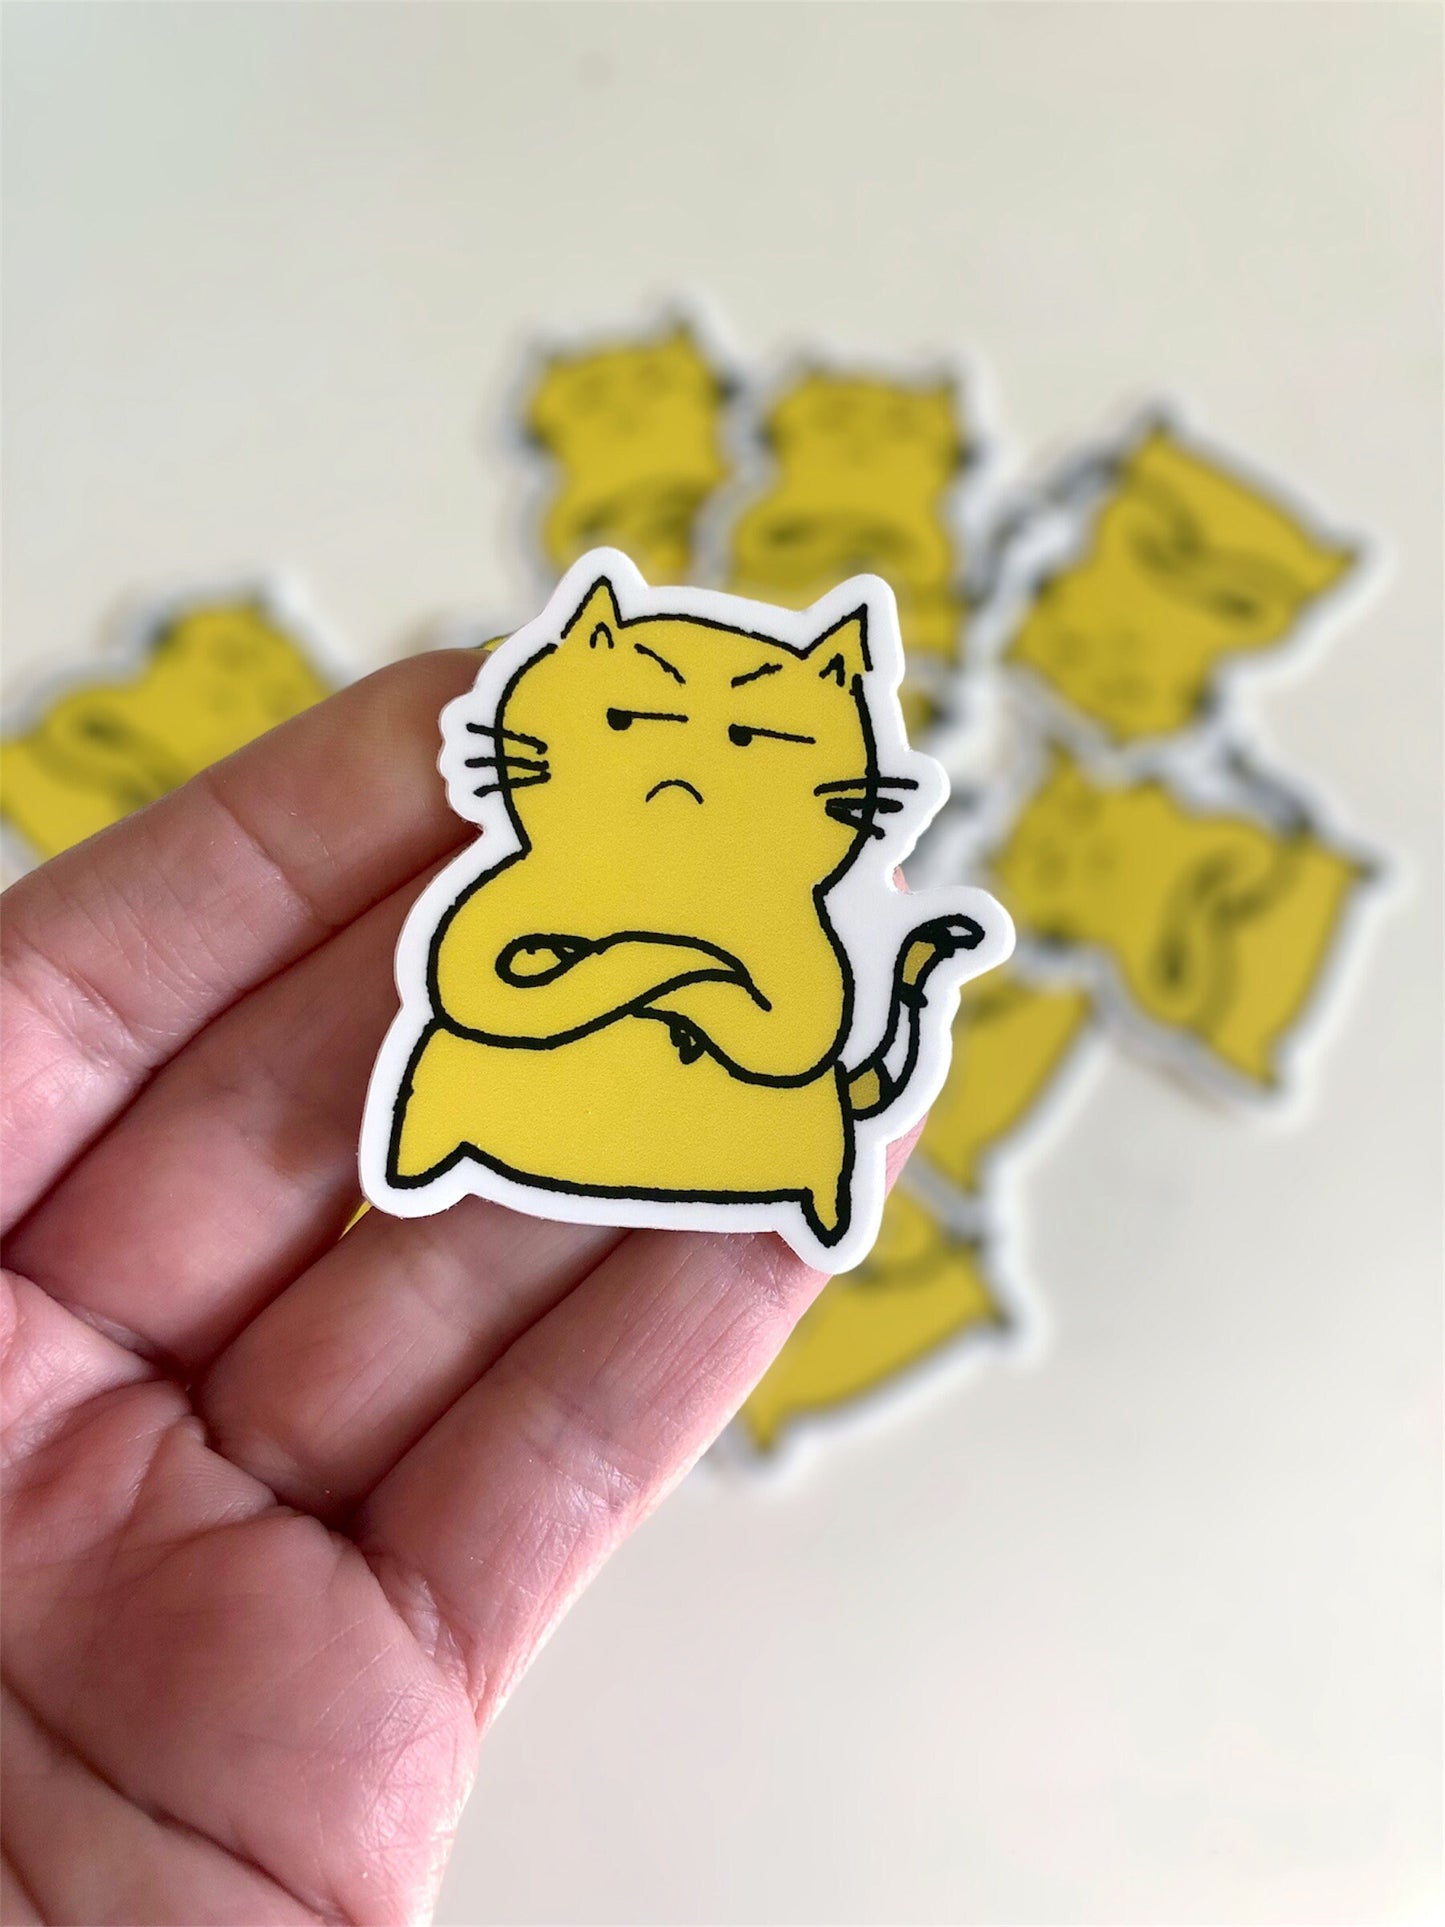 cat sticker, funny cat sticker for laptop, resentful cat, cat lover gift, crazy cat lady, humorous durable vinyl sticker, grumpy cartoon cat